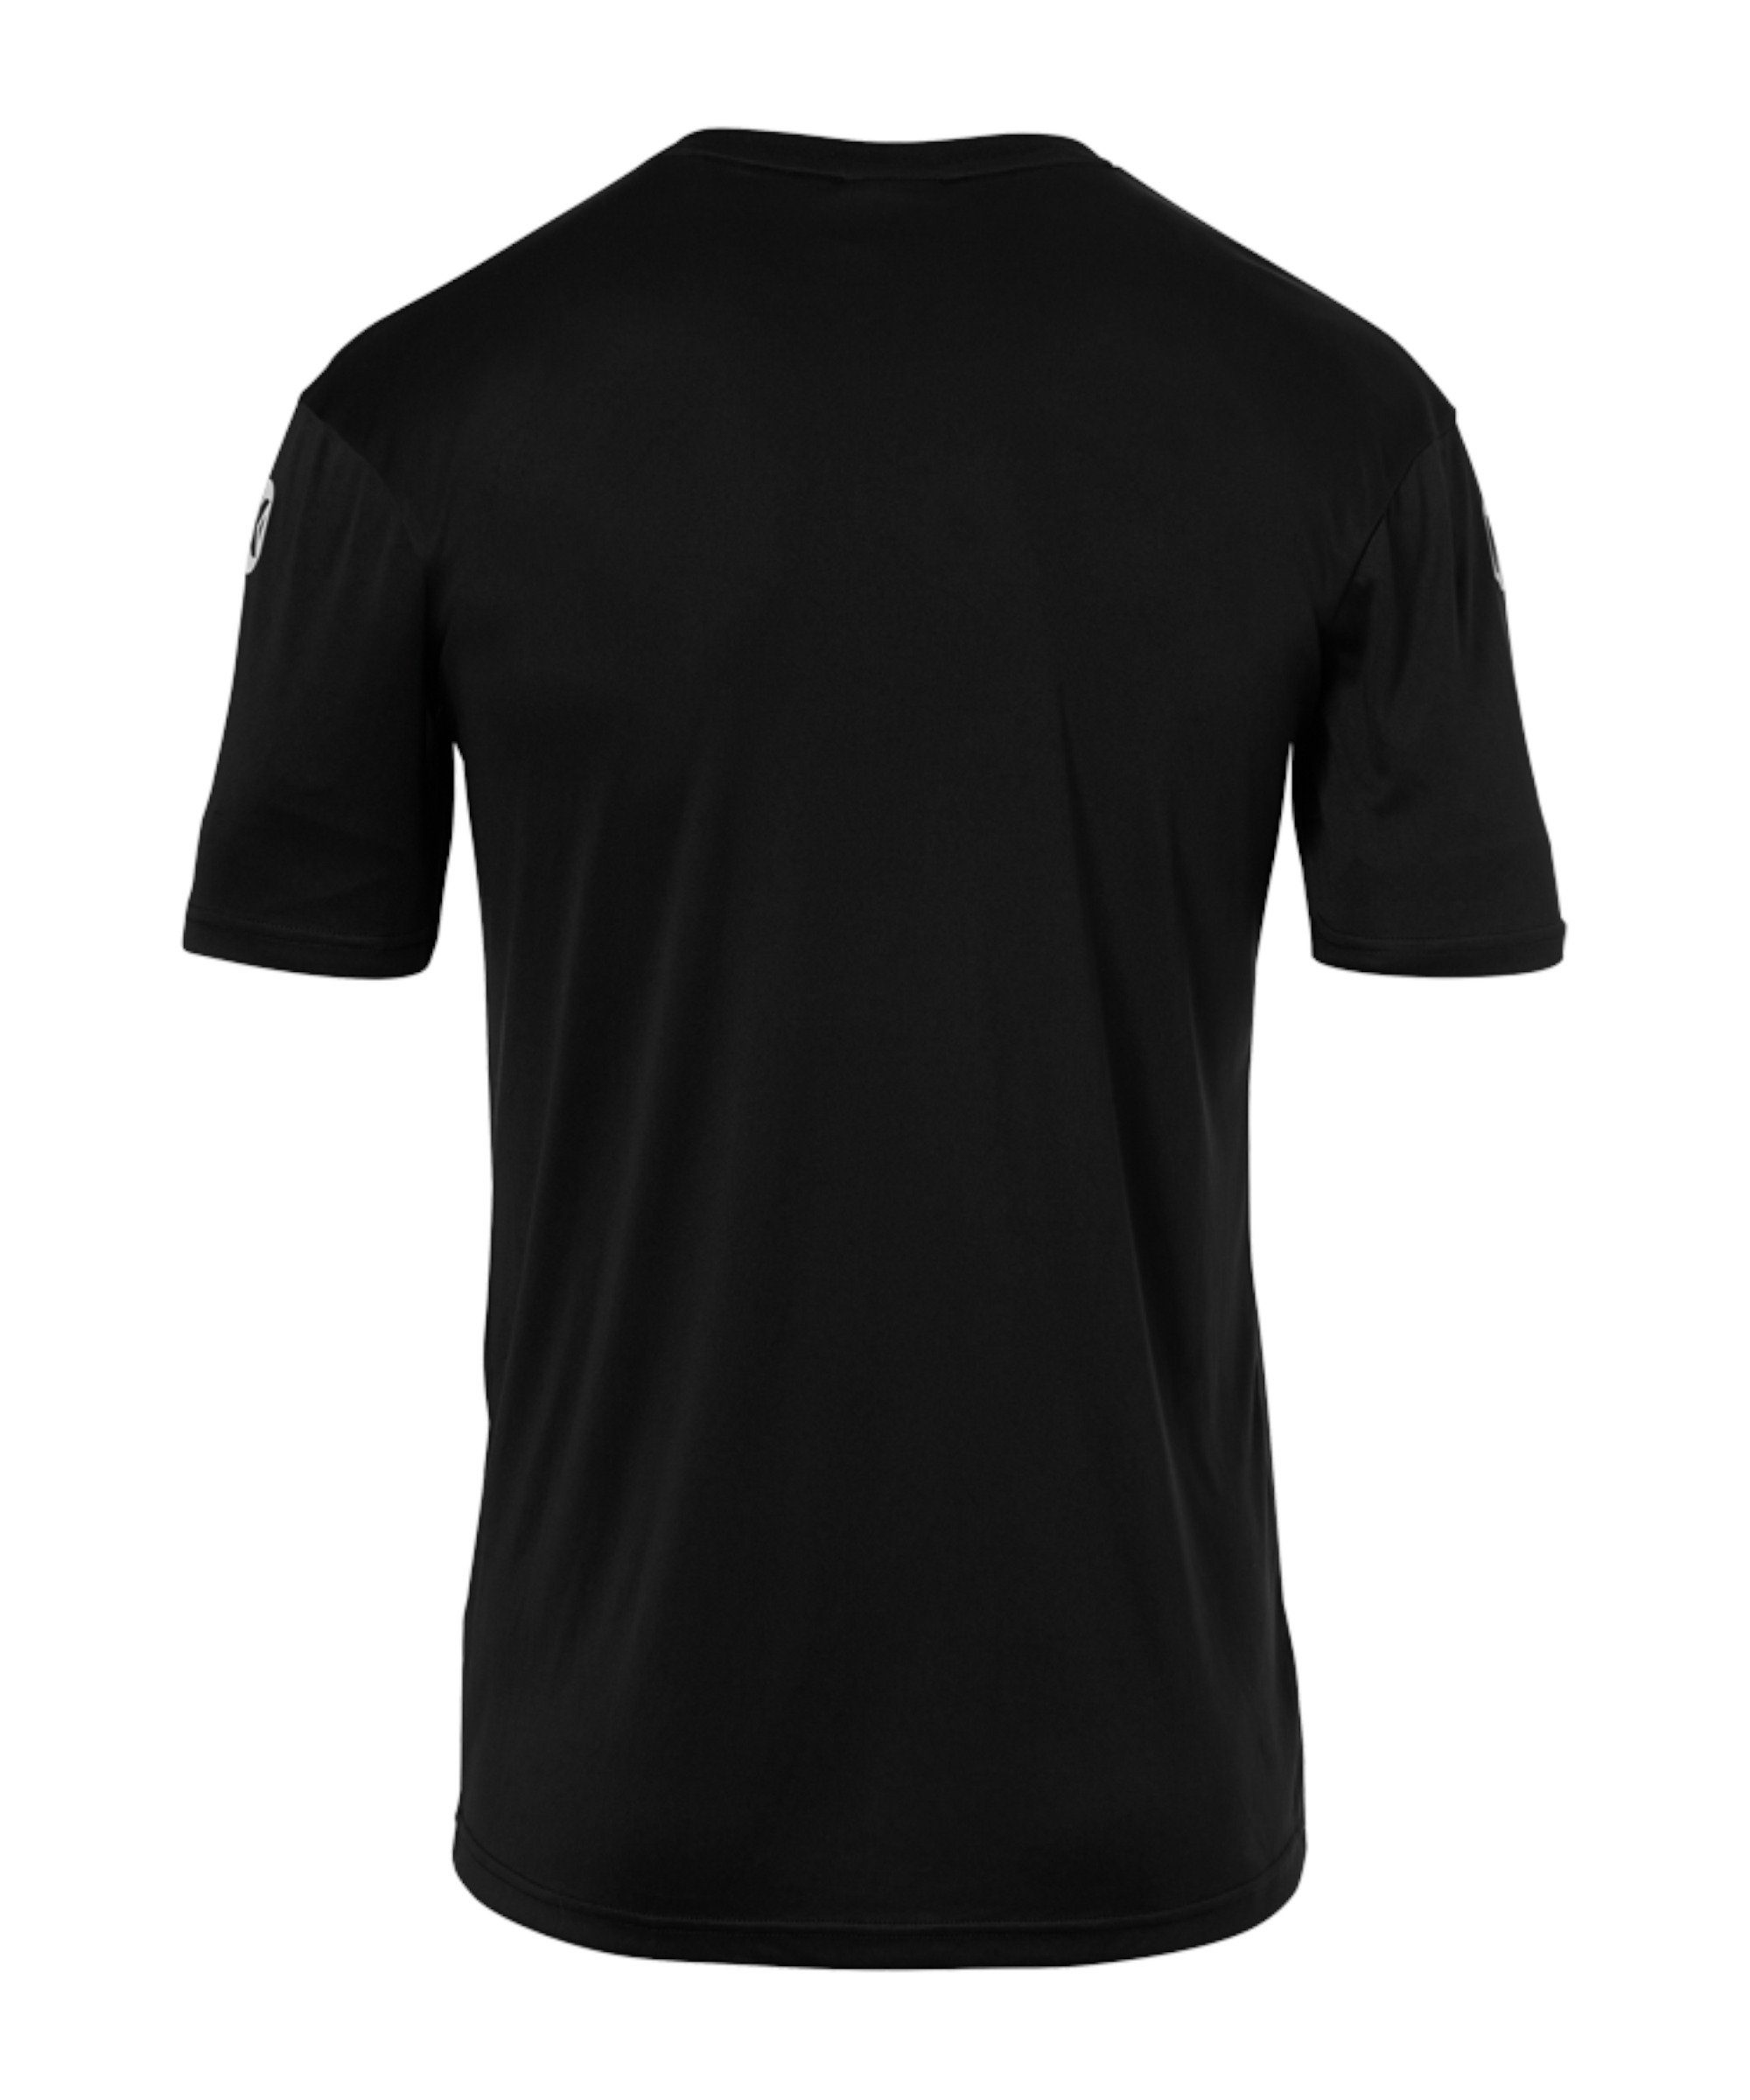 uhlsport T-Shirt Kempa Emotion T-Shirt Poly schwarz default 2.0